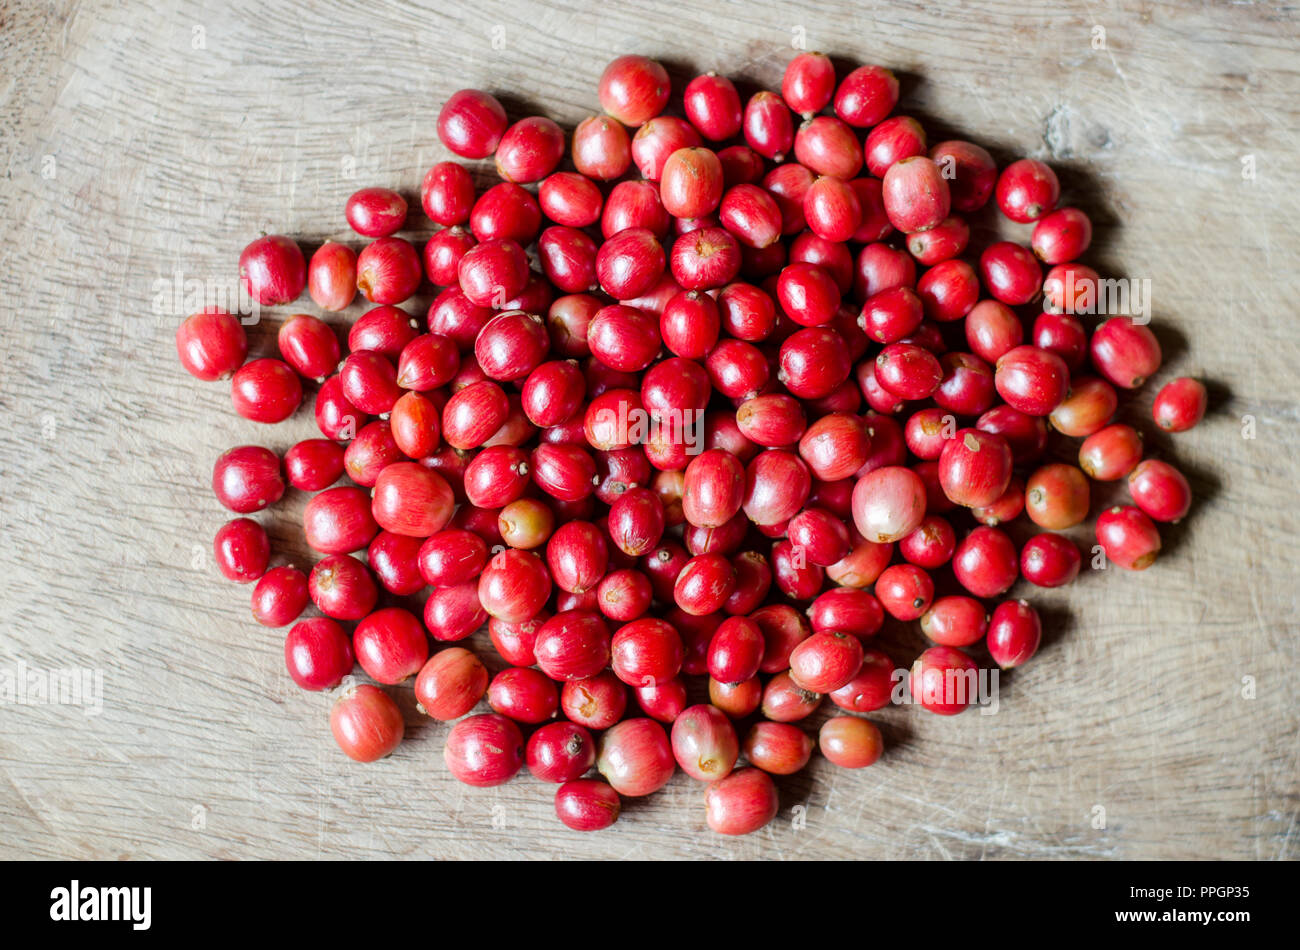 Ripe coffee cherries on a bowl Stock Photo